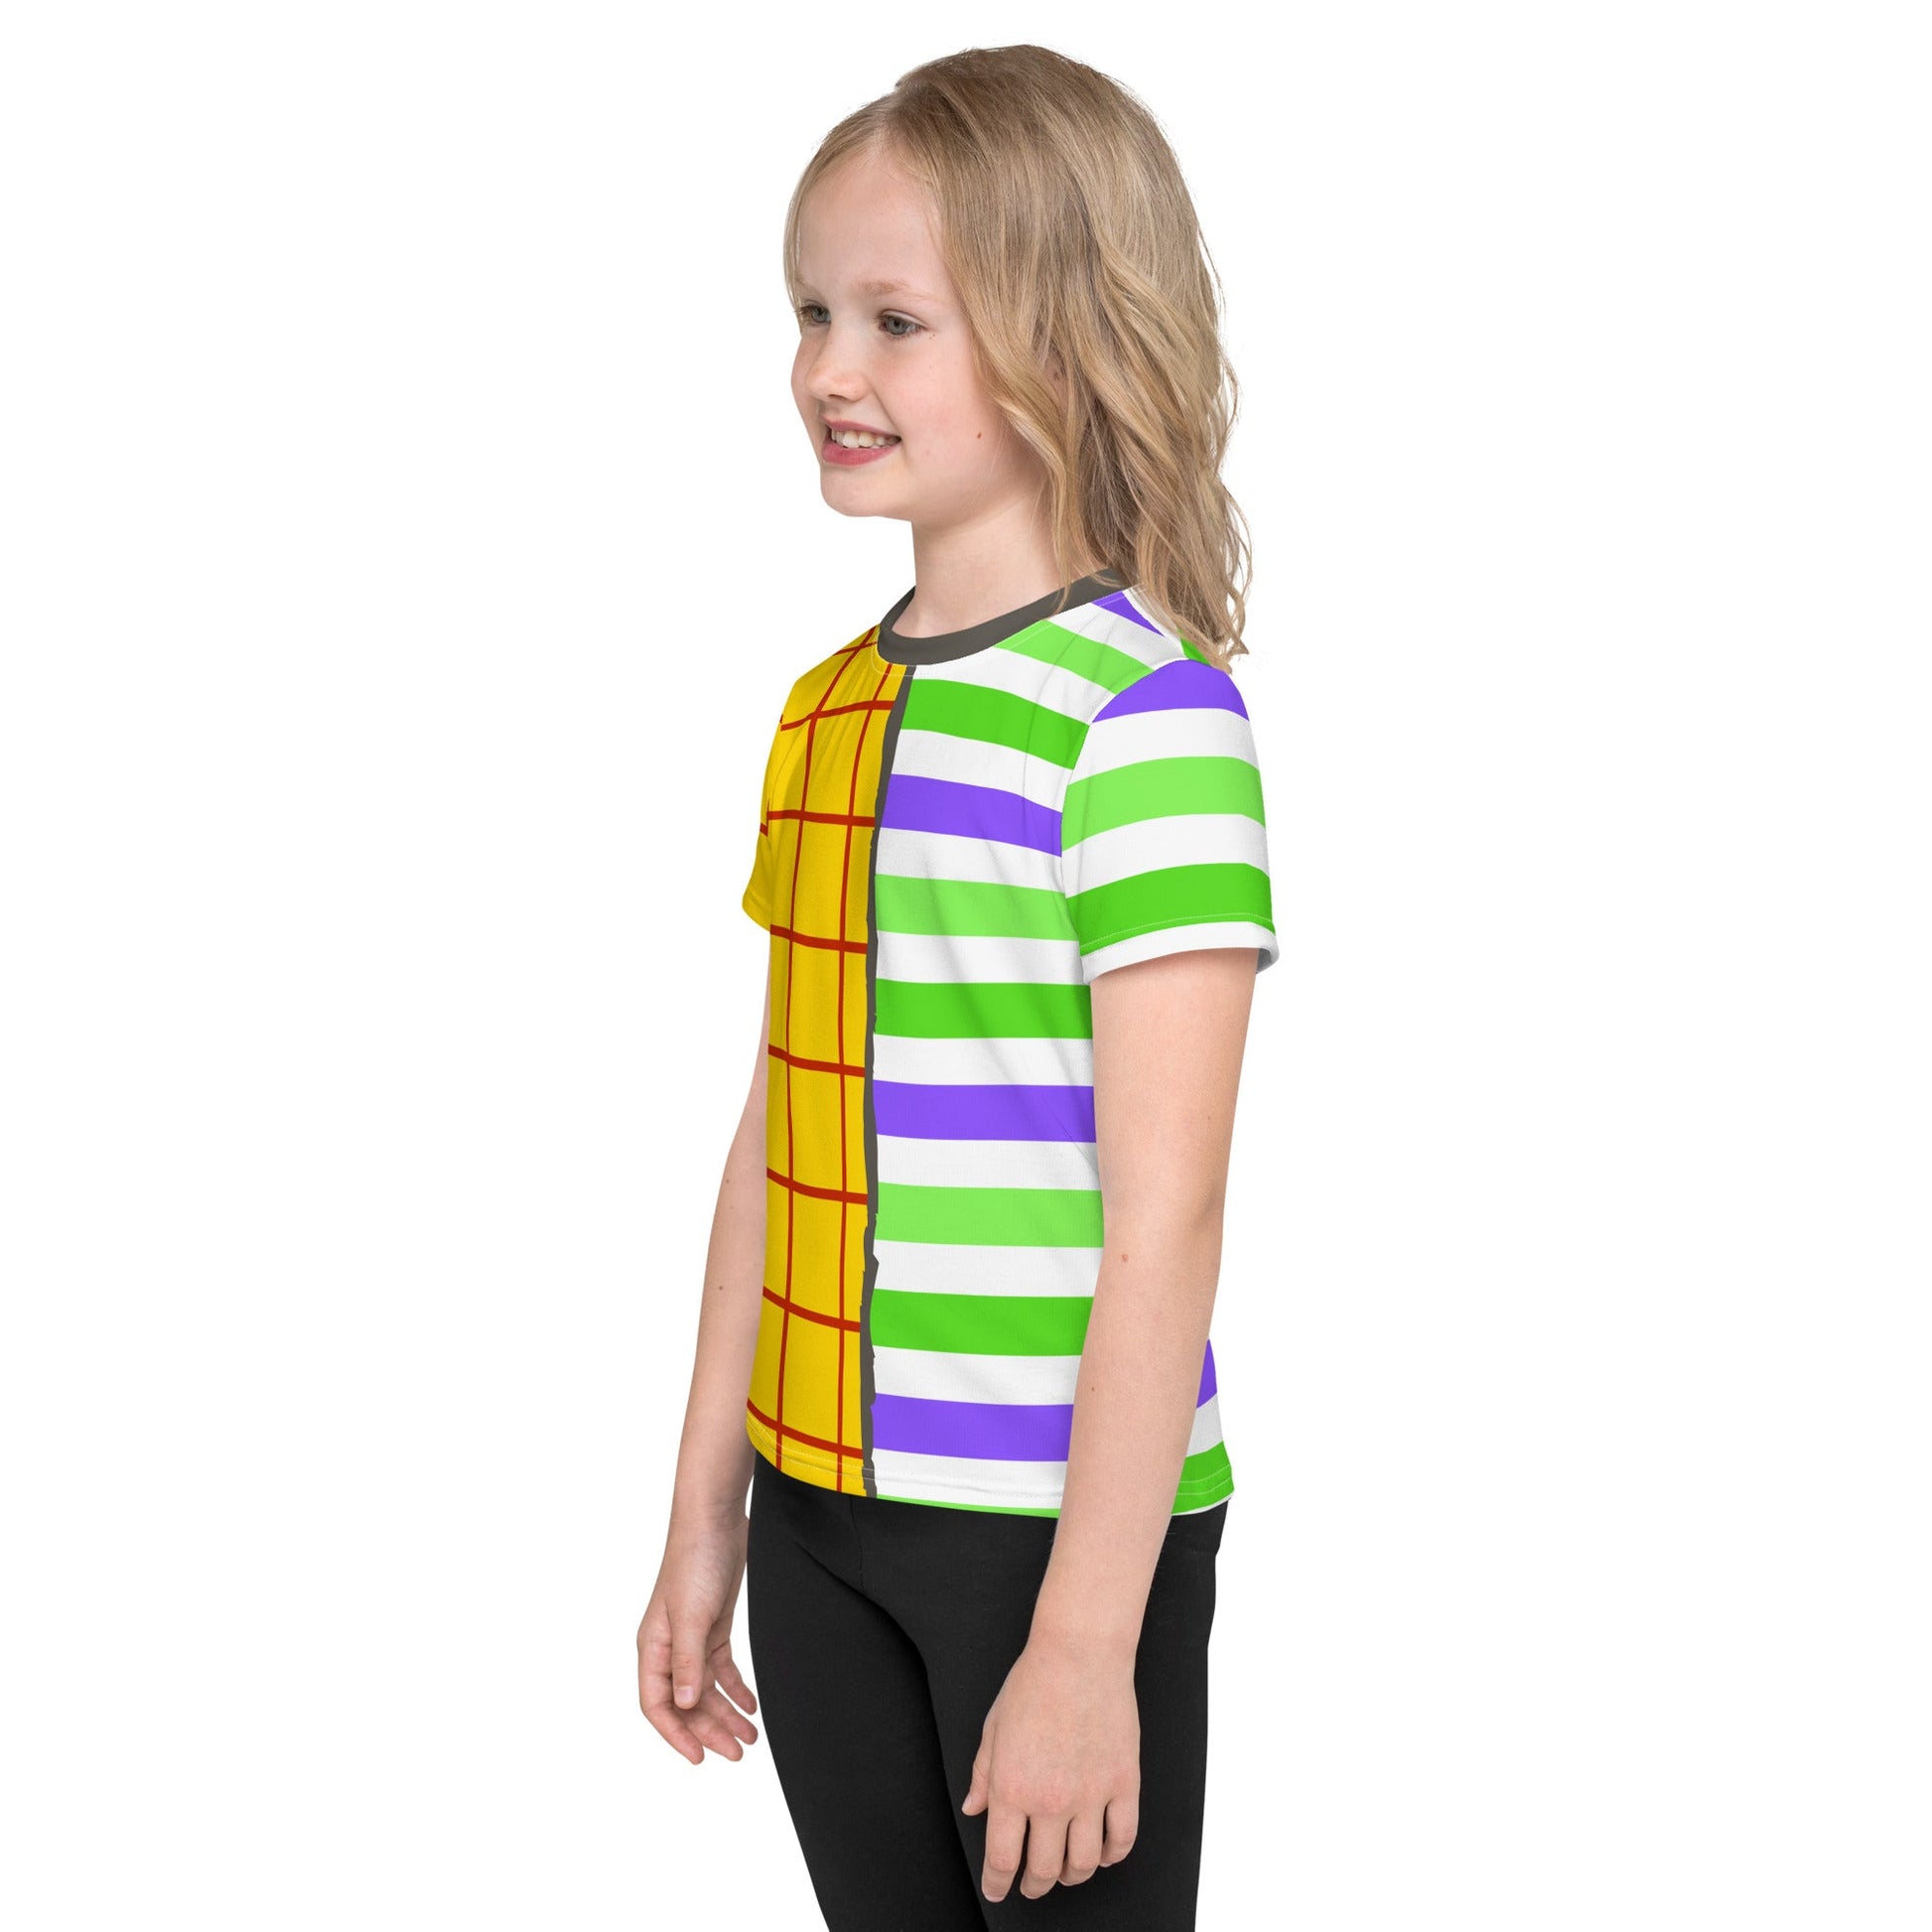 Andy's Room Kids crew neck t-shirt buzz lightyeardisney adultdisney bounding#tag4##tag5##tag6#